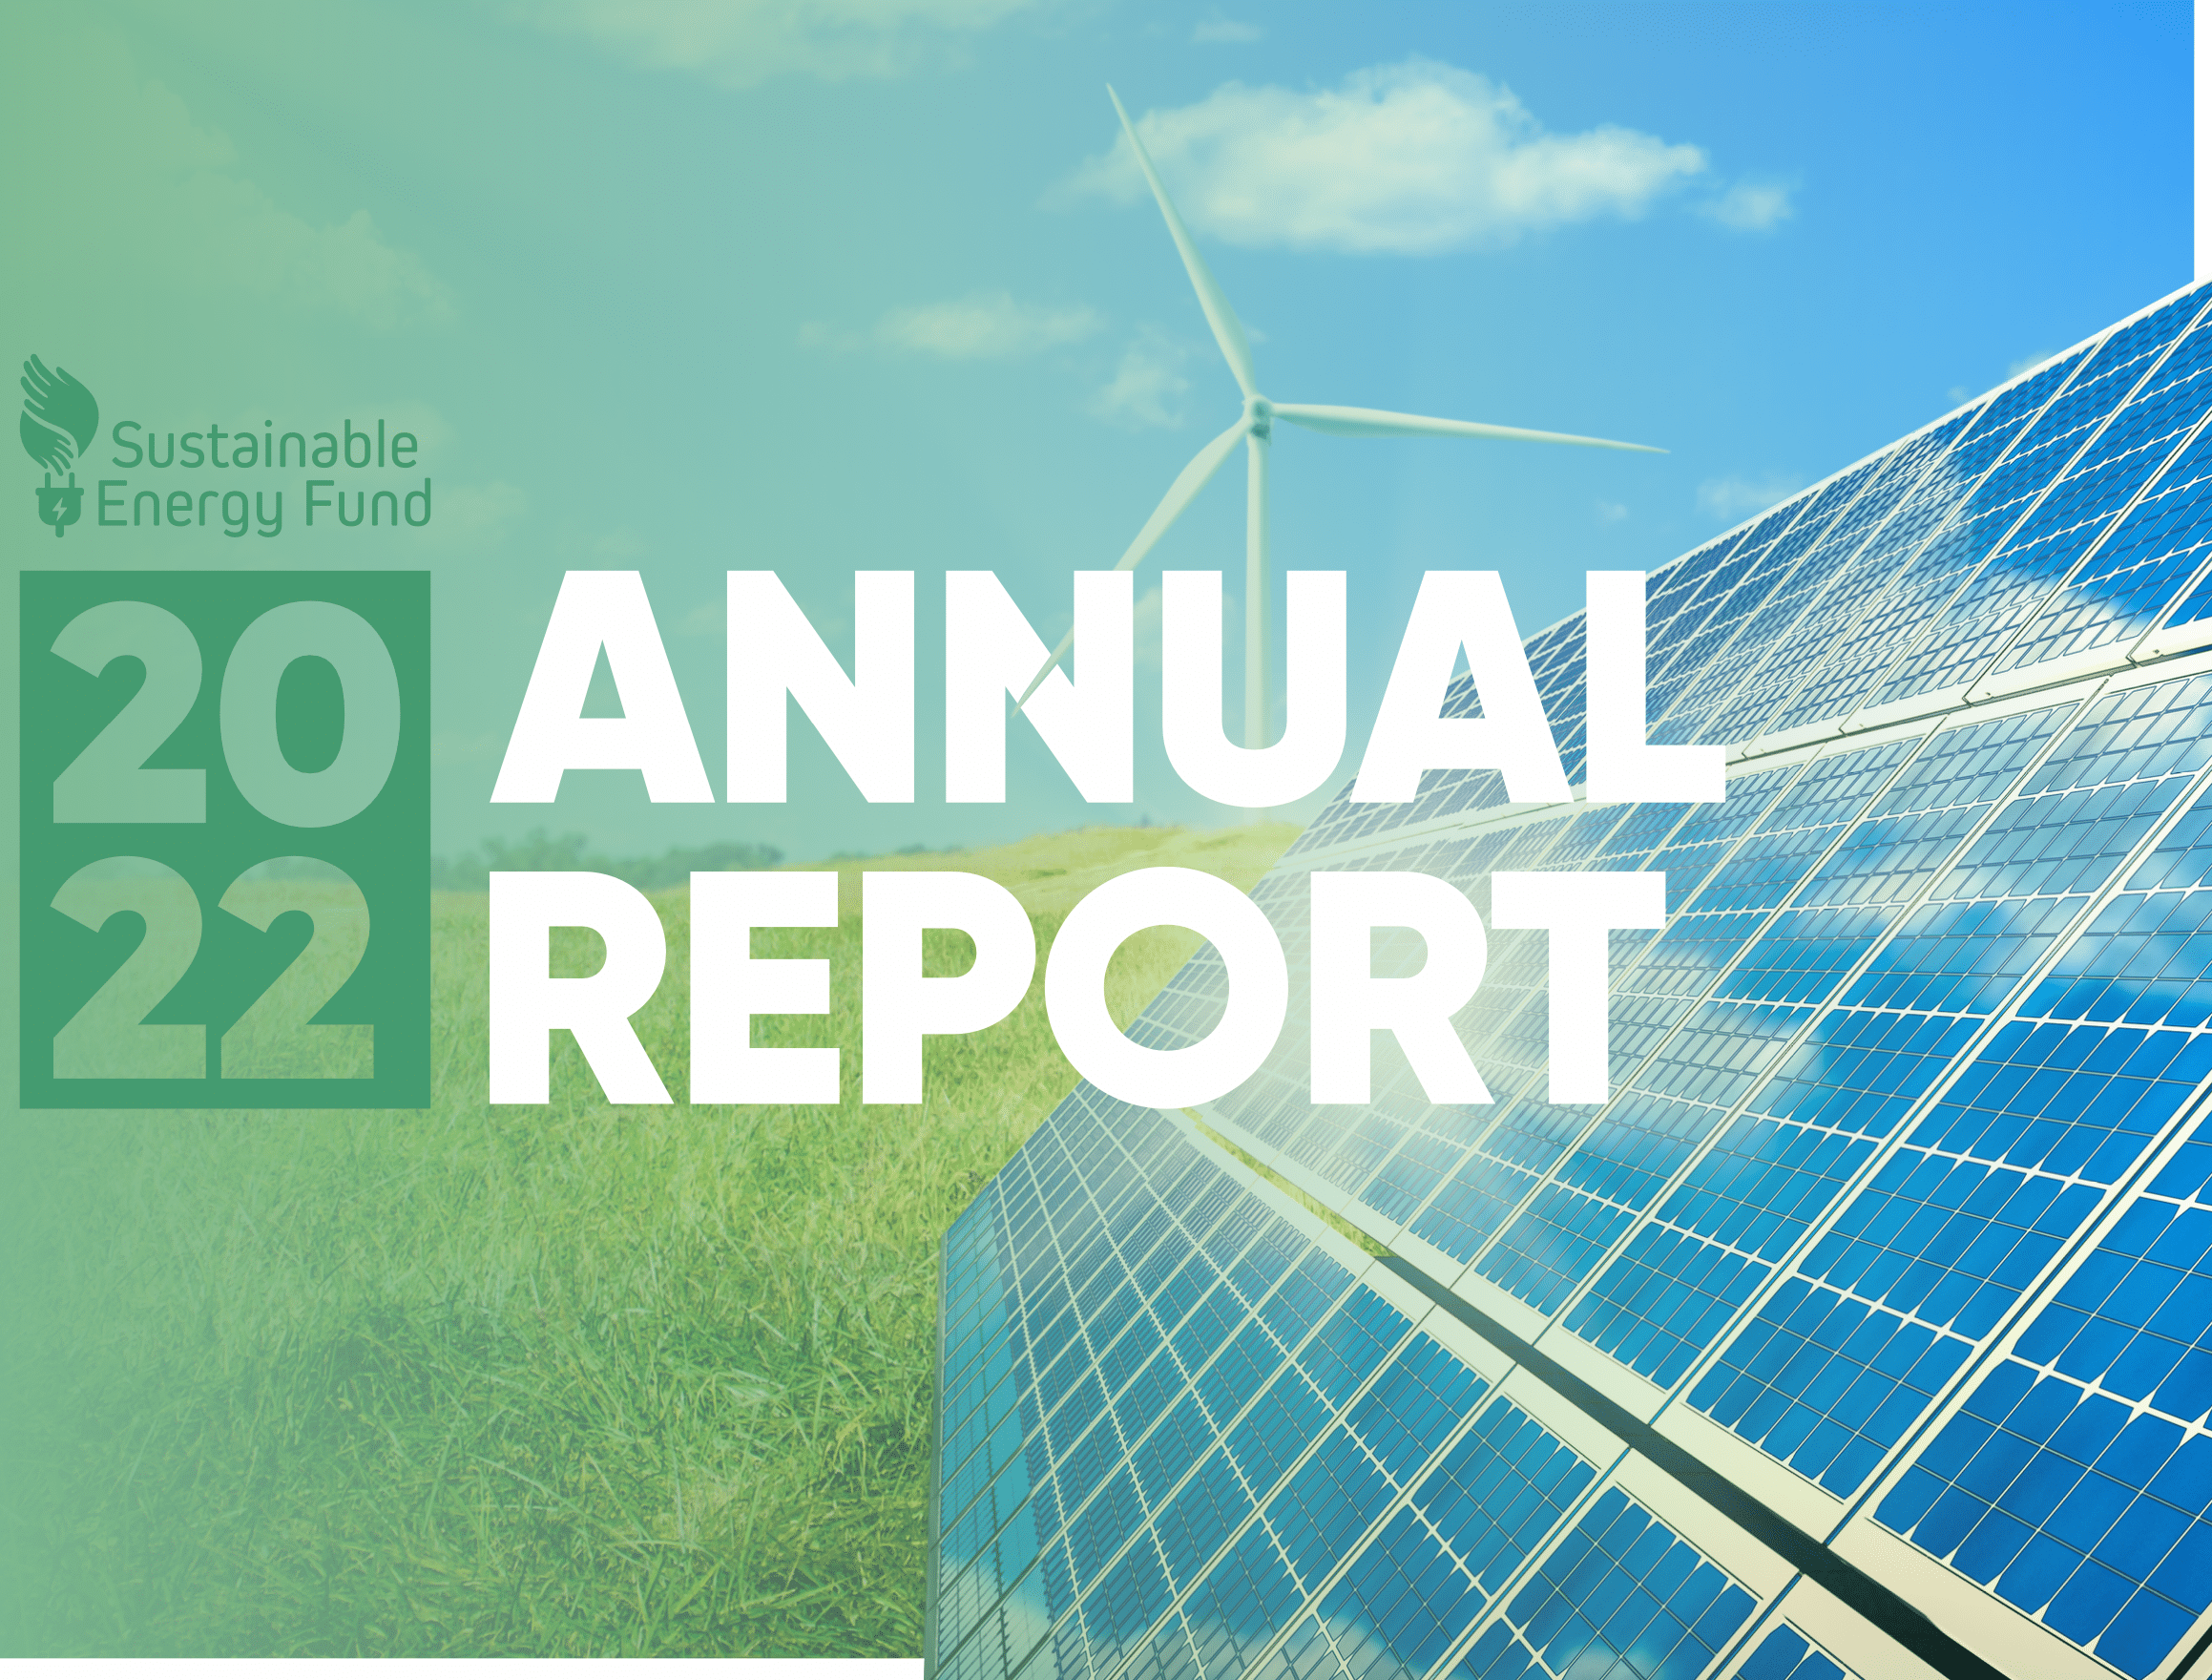 2022 Annual Report